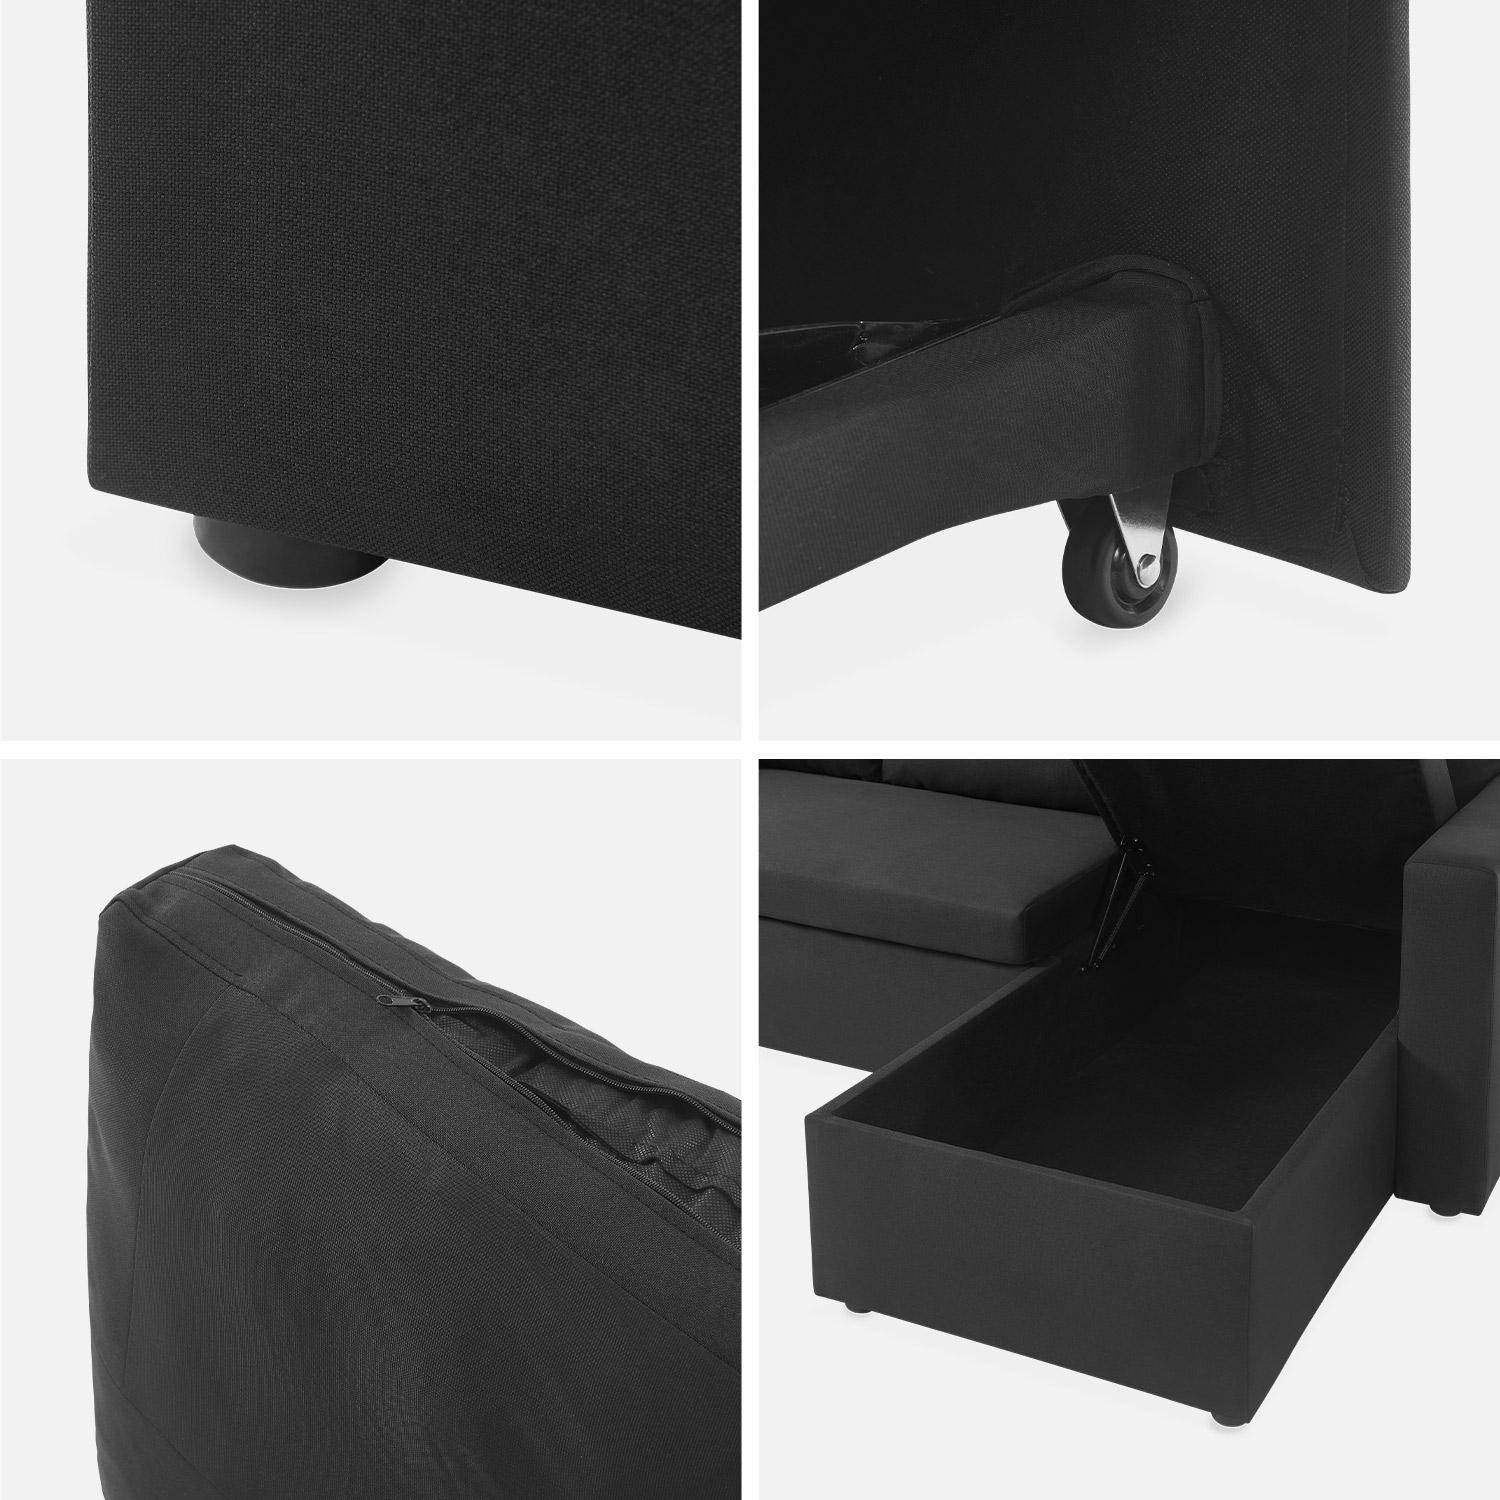 3-seater reversible black corner sofa bed with storage box, black L219xD81xH68cm, IDA,sweeek,Photo11